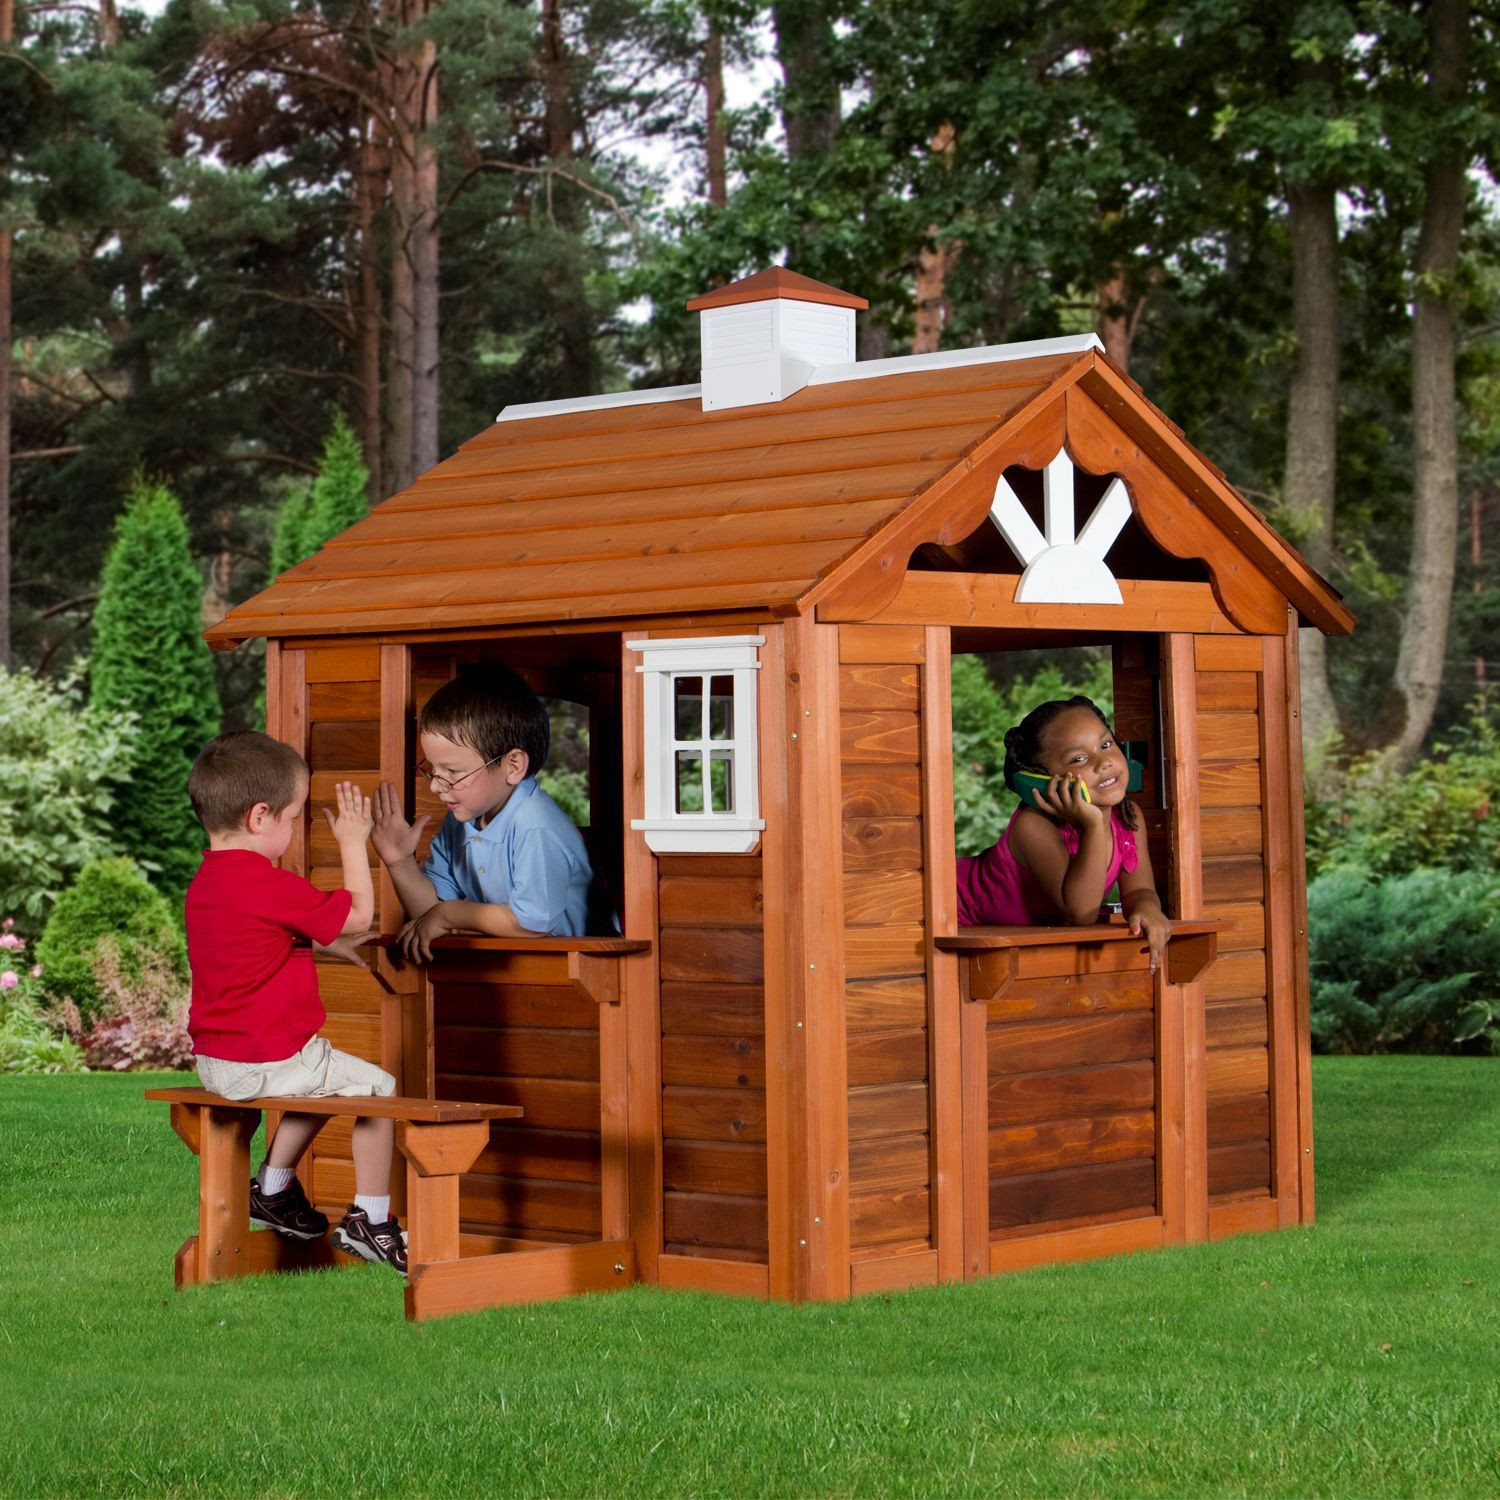 Outdoor Playhouse For Kids
 Children Playhouse Kids Play Fun Outdoor Garden Log Cabin